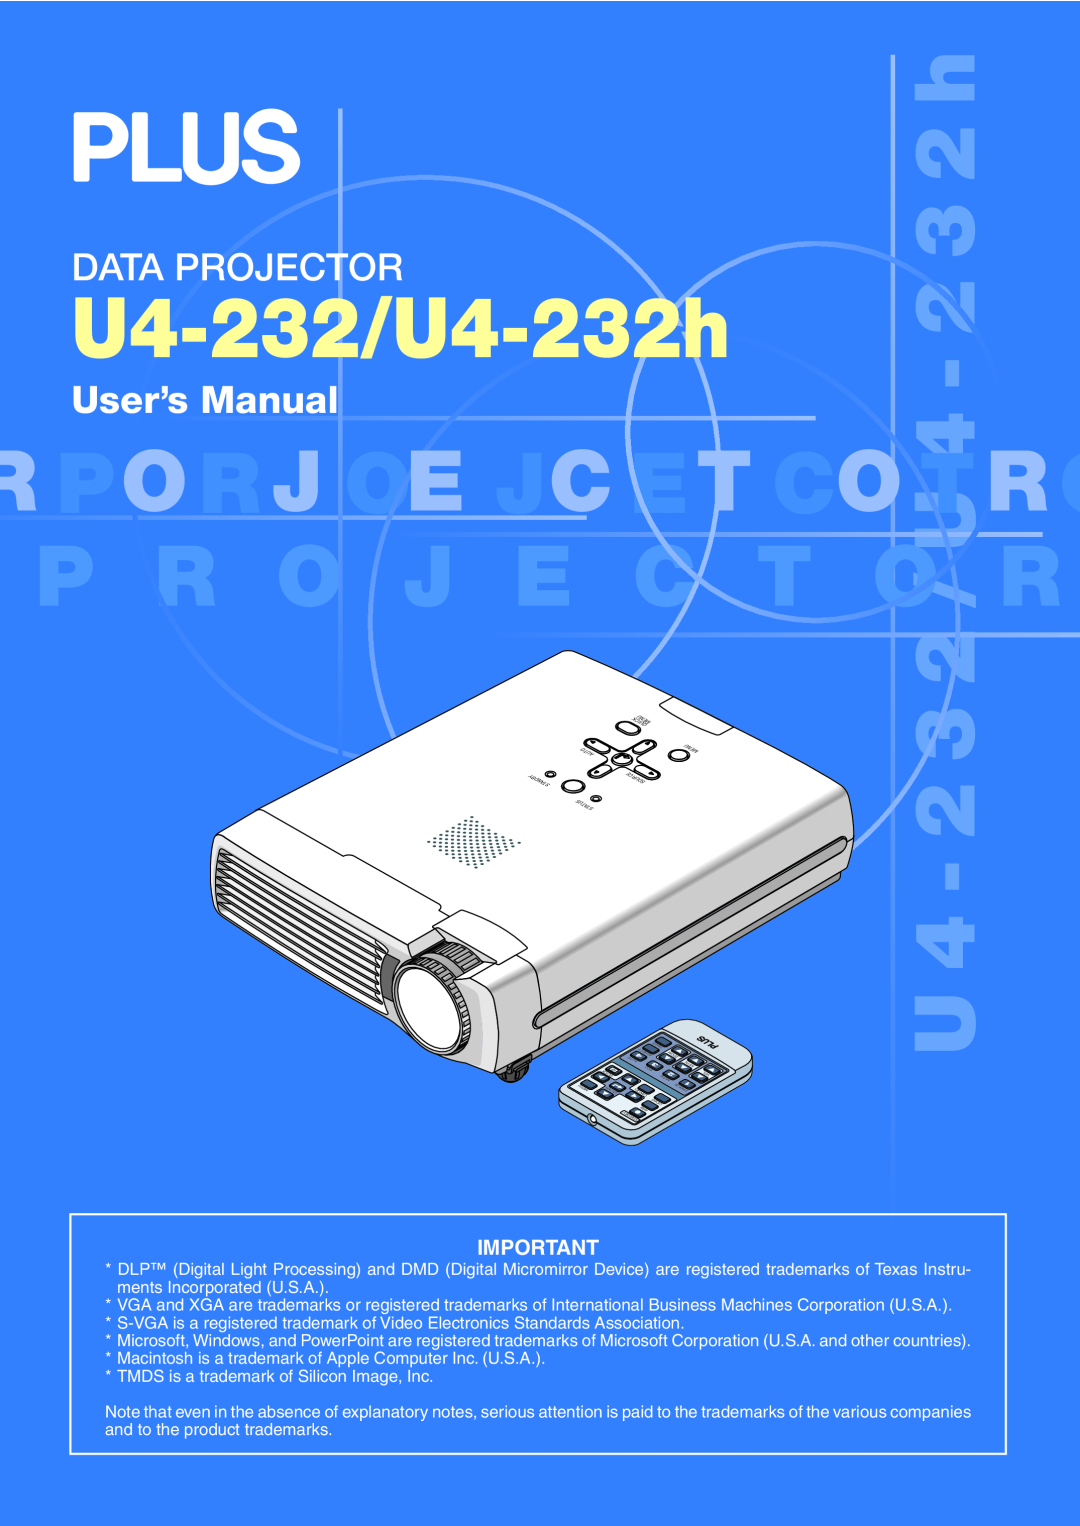 PLUS Vision user manual U4-232/U4-232h, U 4 - 2 3 2 / U 4 - 2 3 2 h, Data Projector, User’s Manual 